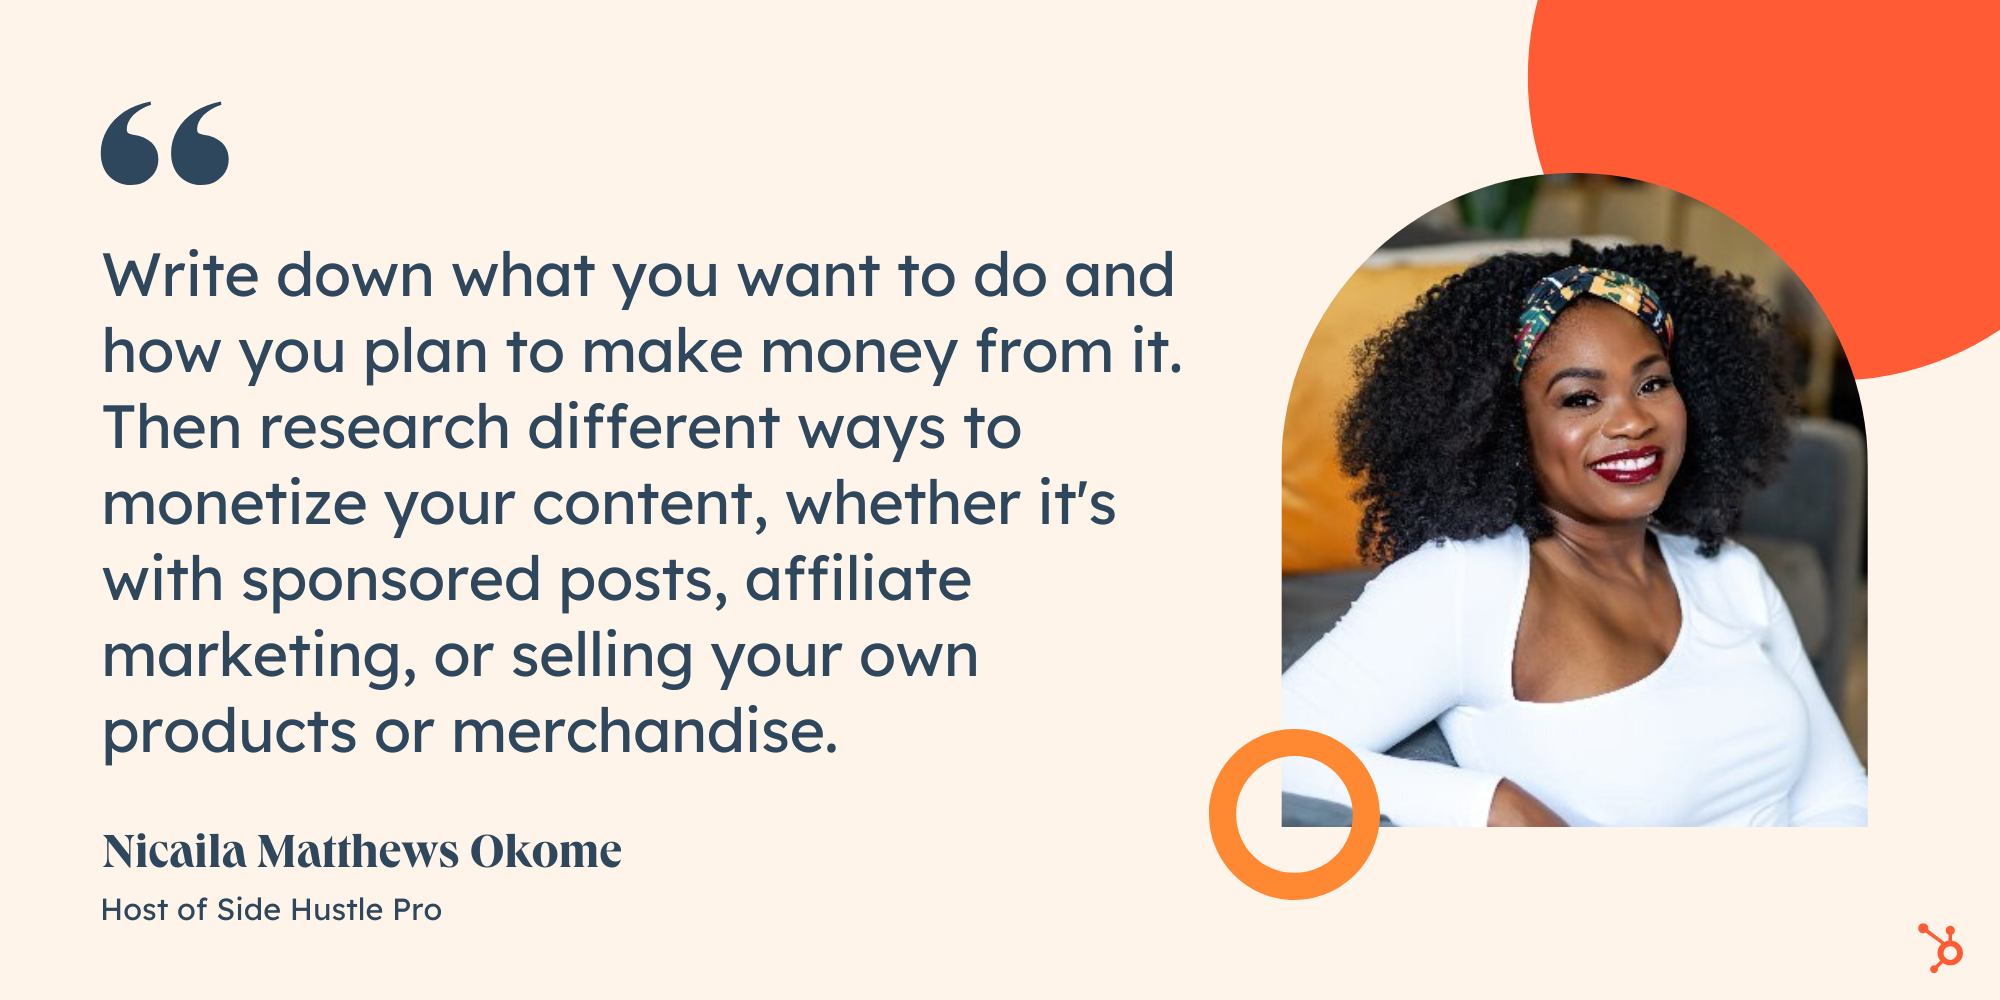 Nichella Mathews Okome on becoming a full-time content creator